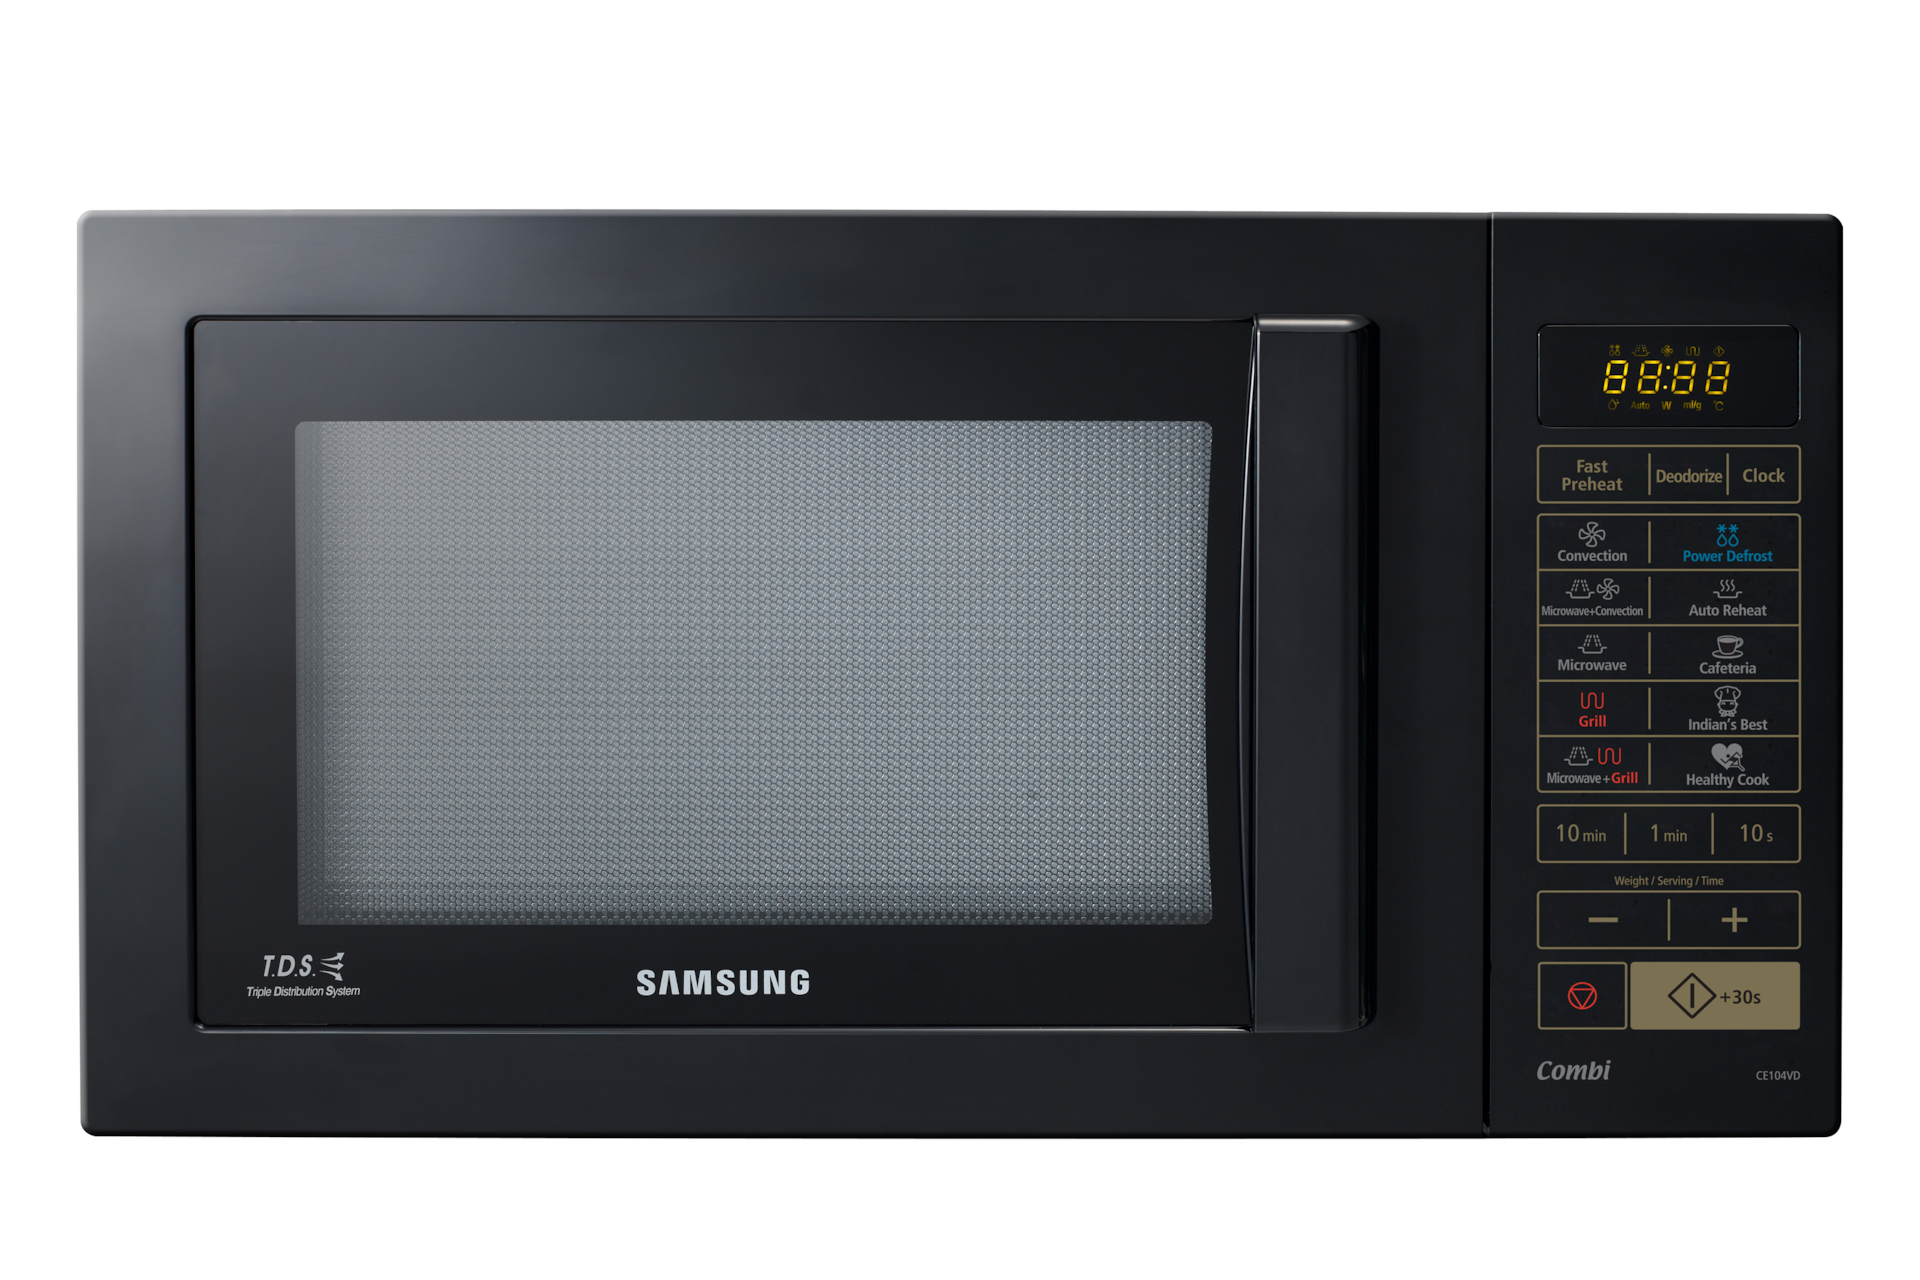 Samsung Convection Oven 28lt, Best Convection Microwave Specs, Features